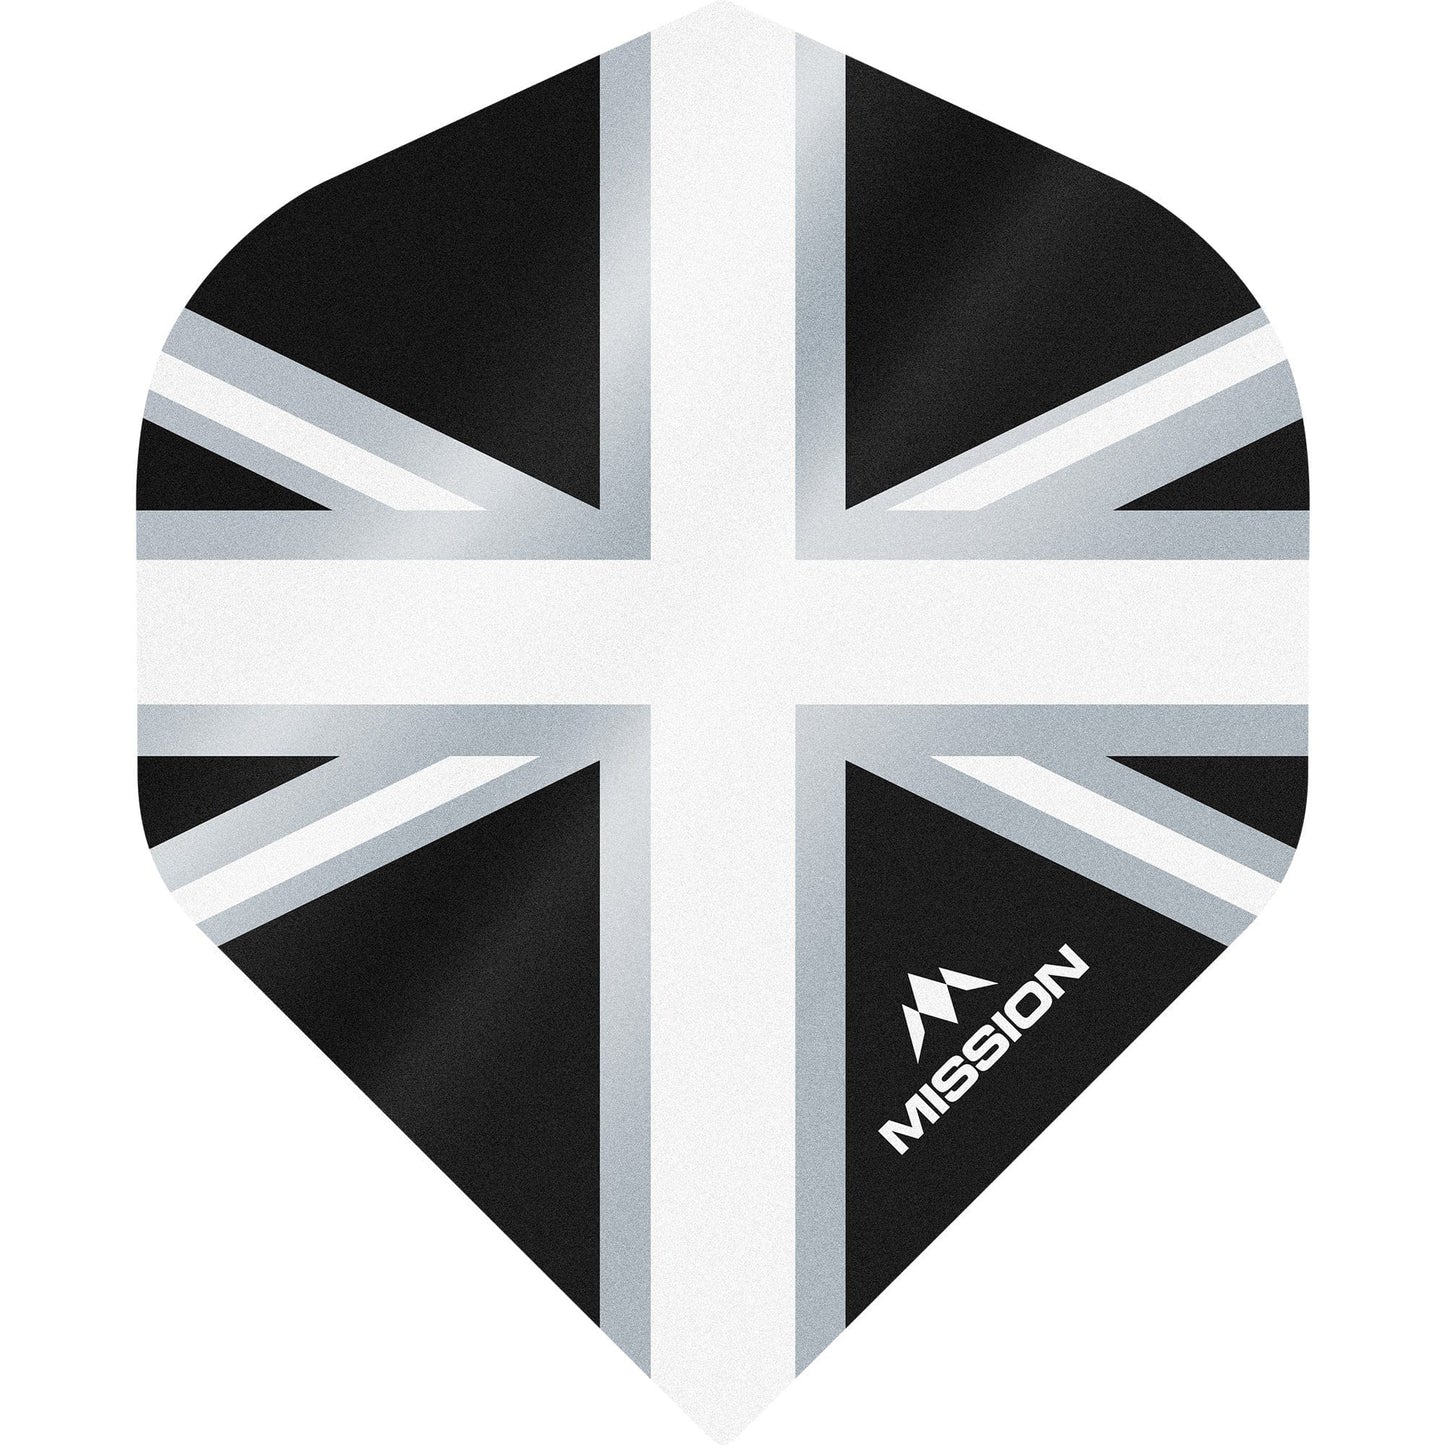 Mission Alliance Union Jack Dart Flights - No2 - Std - Black Black White